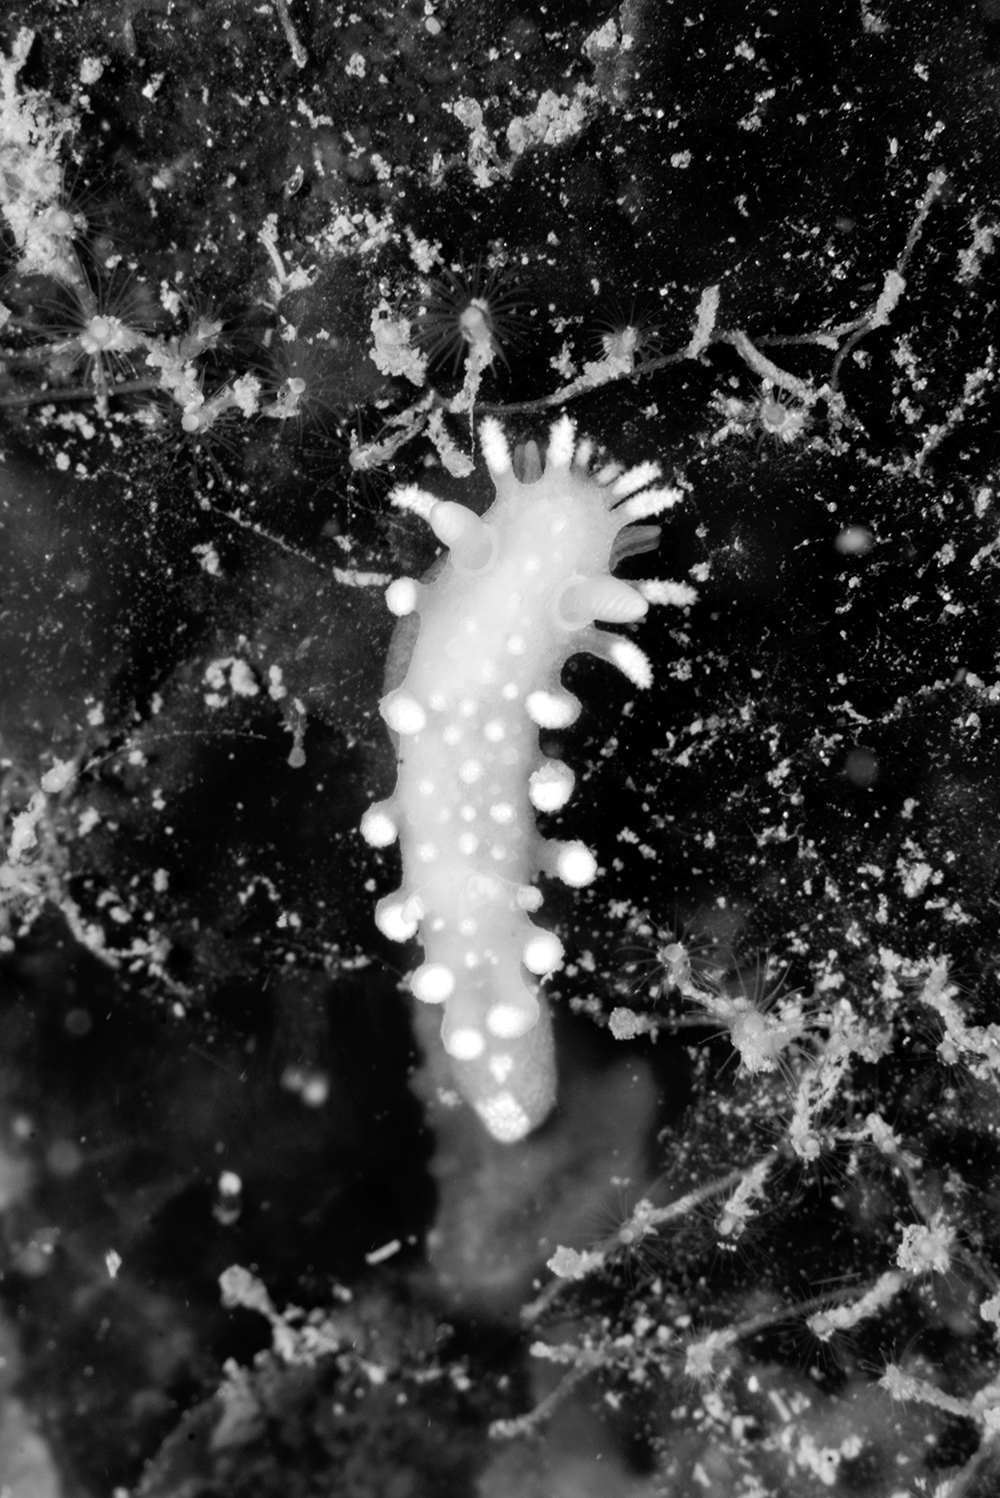 nudibranch, Polycera sp.